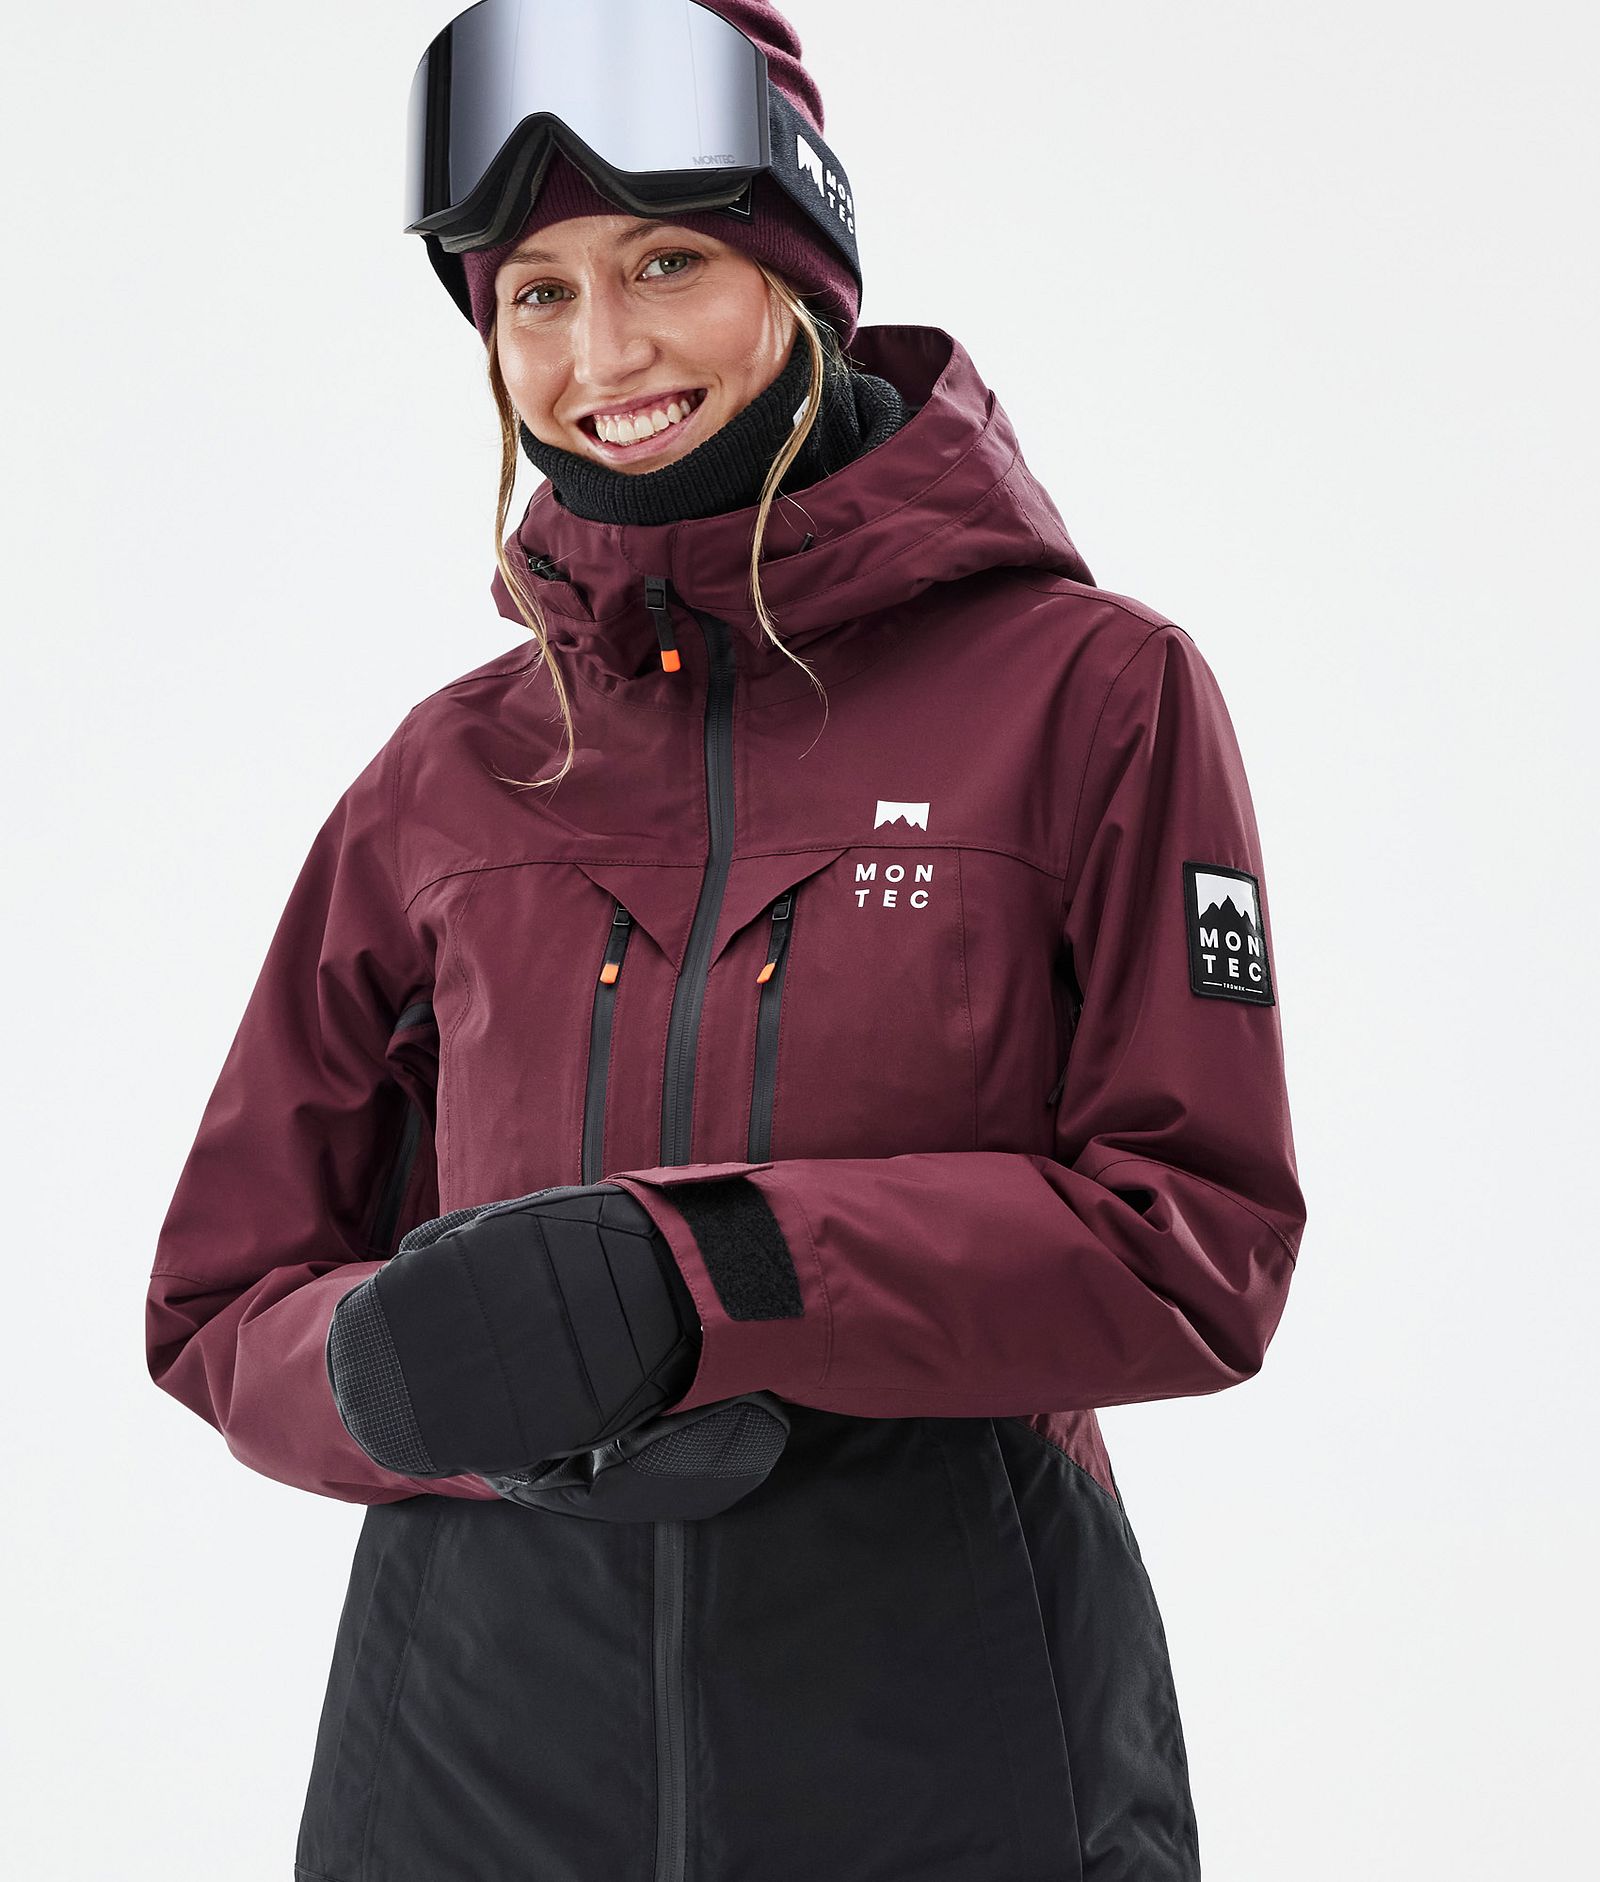 Moss W Snowboard Jacket Women Burgundy/Black Renewed, Image 2 of 10